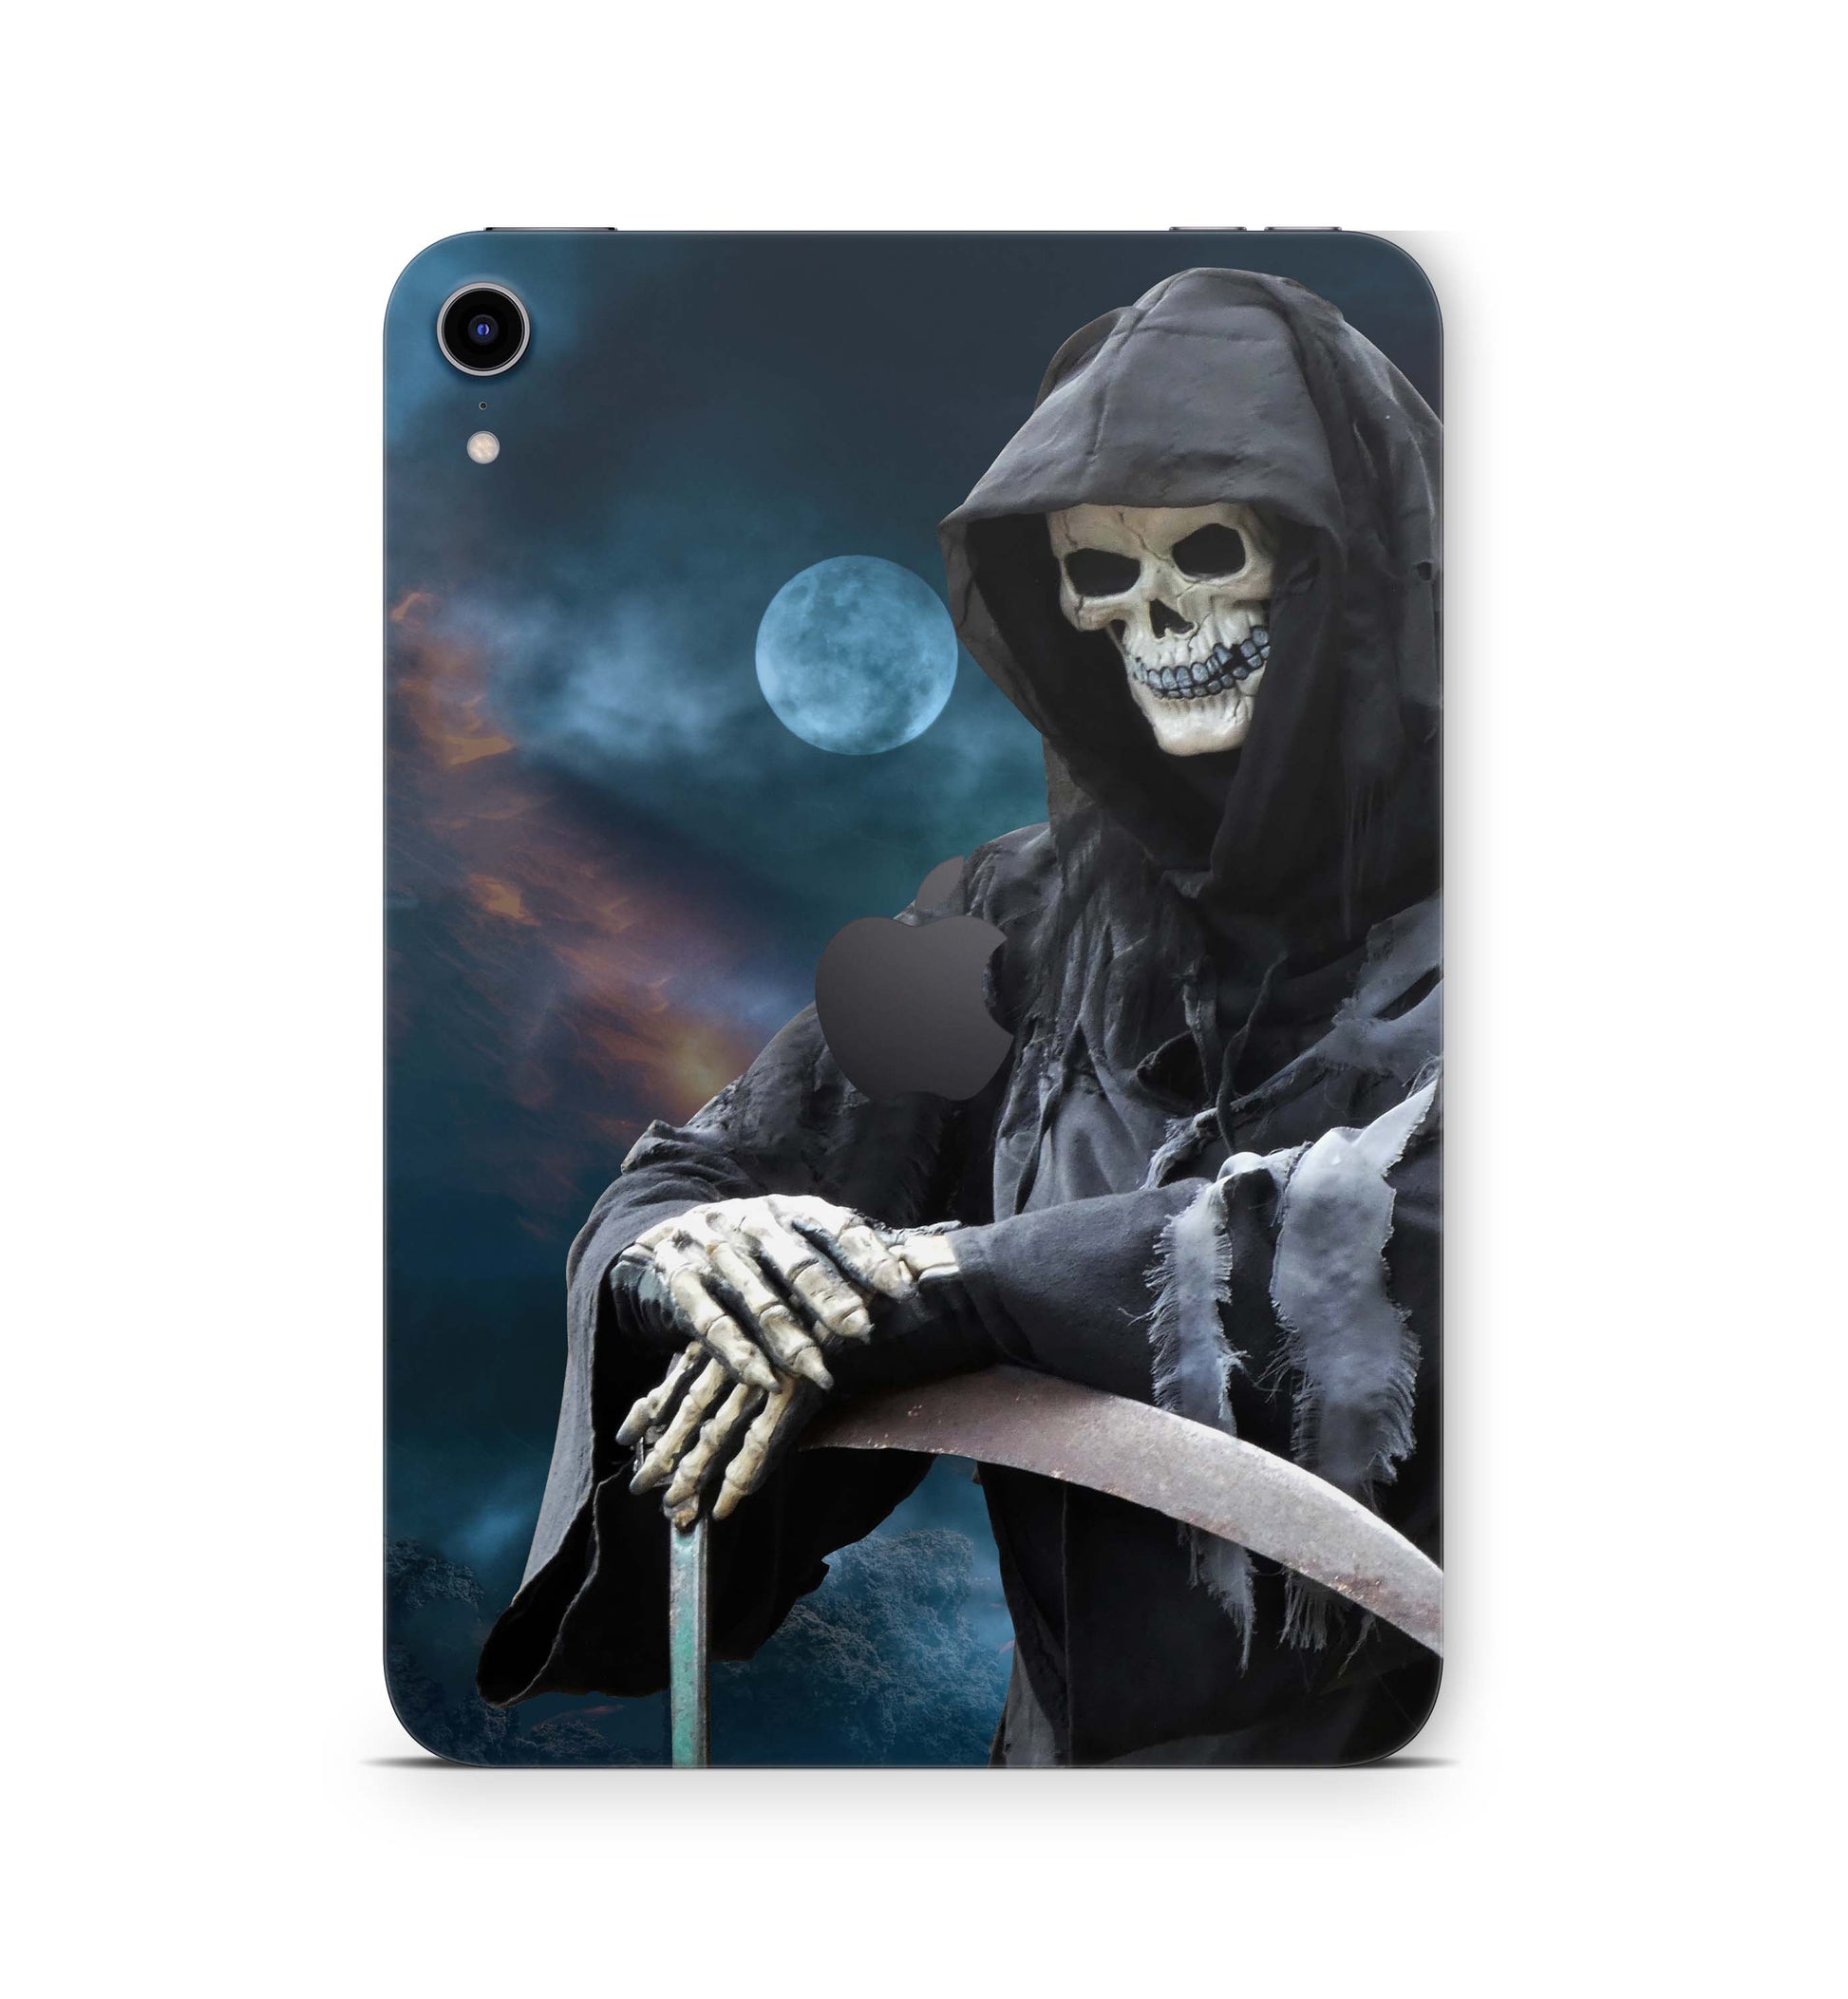 Apple iPad Skin Design Cover Folie Vinyl Skins & Wraps für alle iPad Modelle Aufkleber Skins4u Reaper  